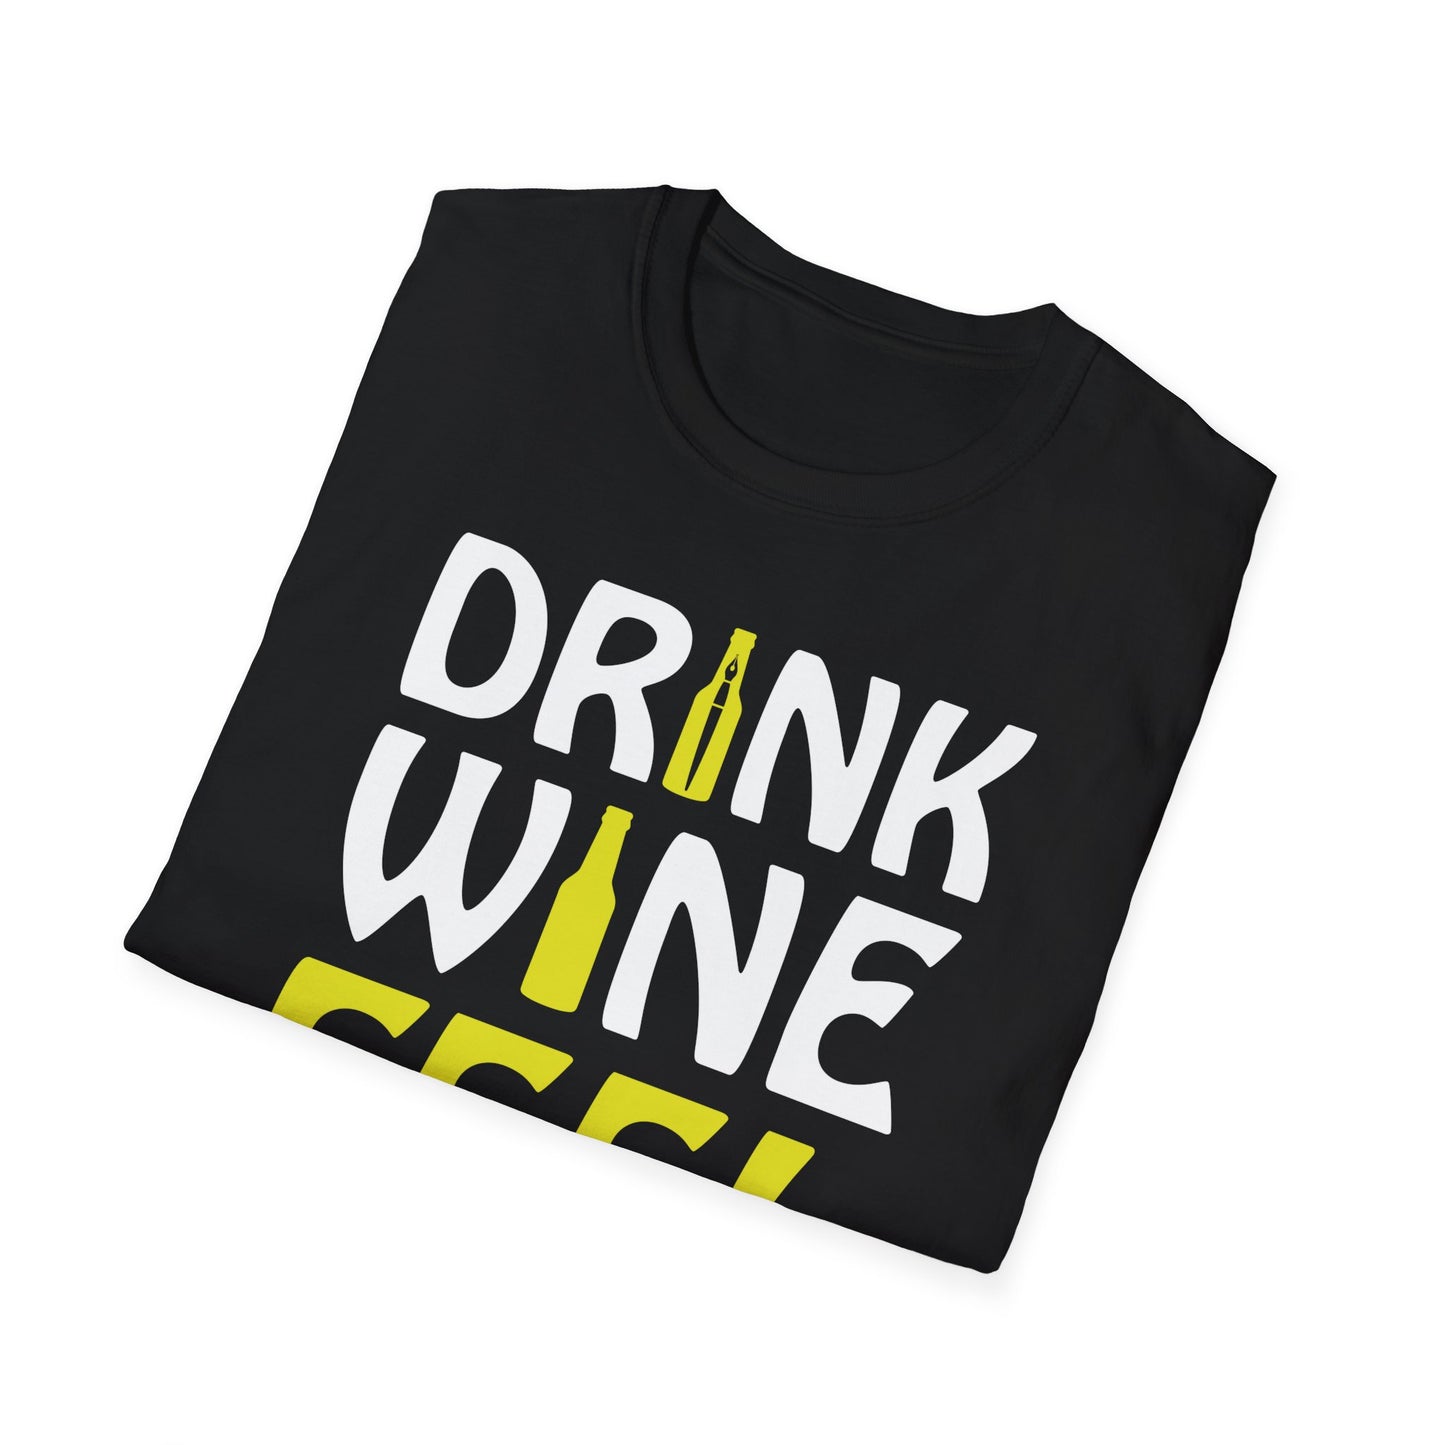 Drink wine feel fine Unisex Softstyle T-Shirt